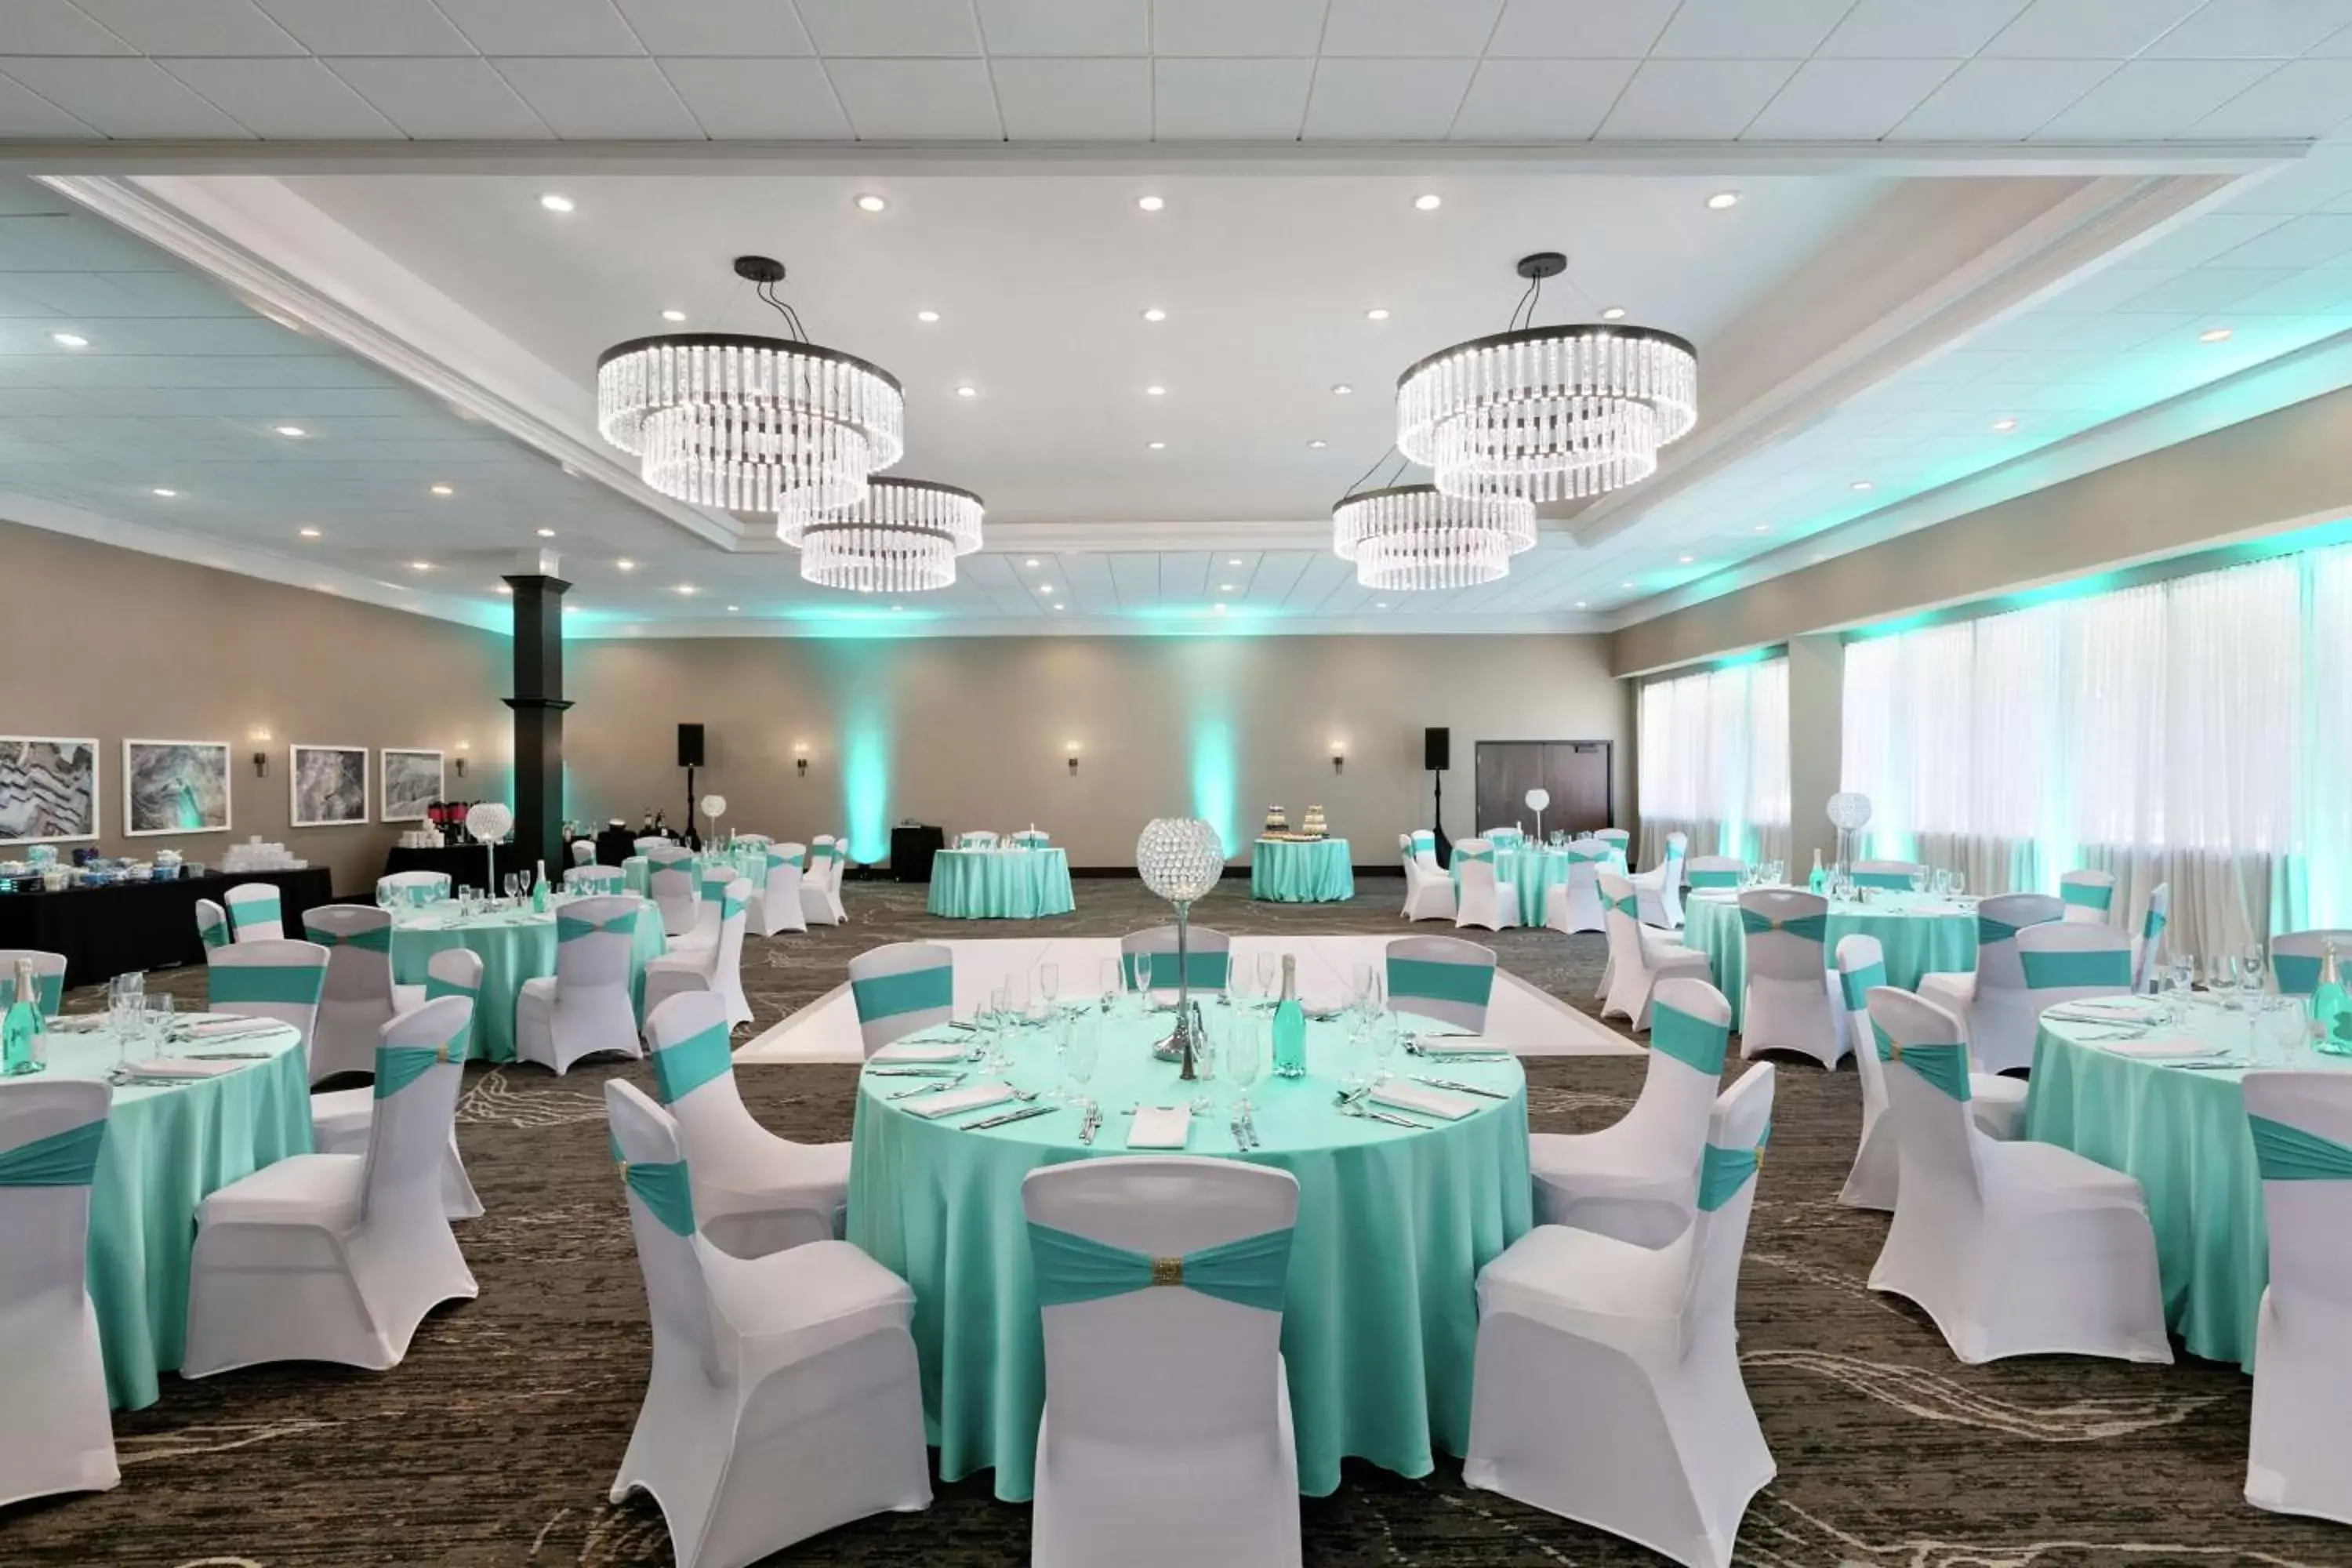 Meeting/conference room, Banquet Facilities in Hilton Orlando/Altamonte Springs